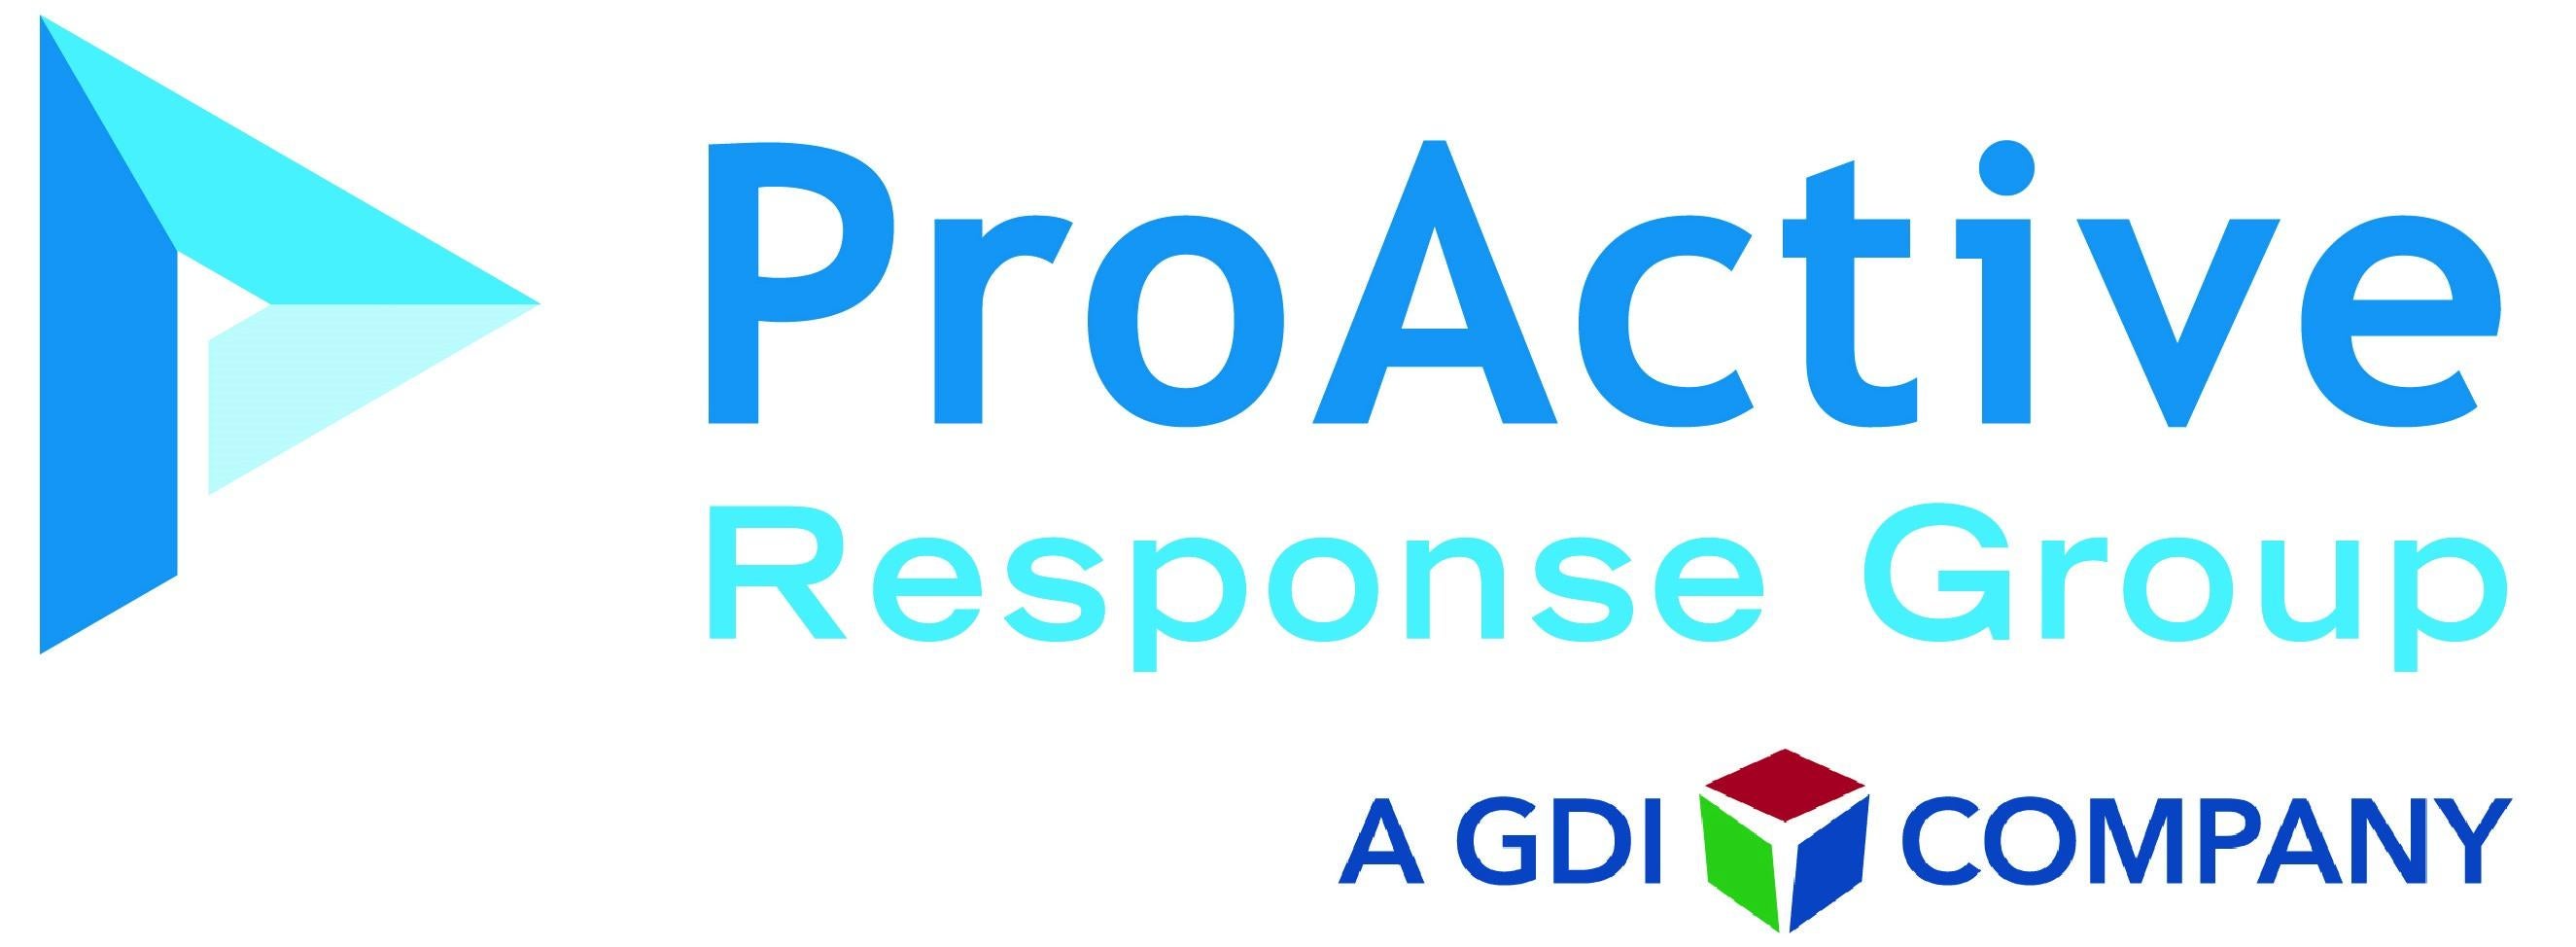 ProActive Response Group - A GDI Company